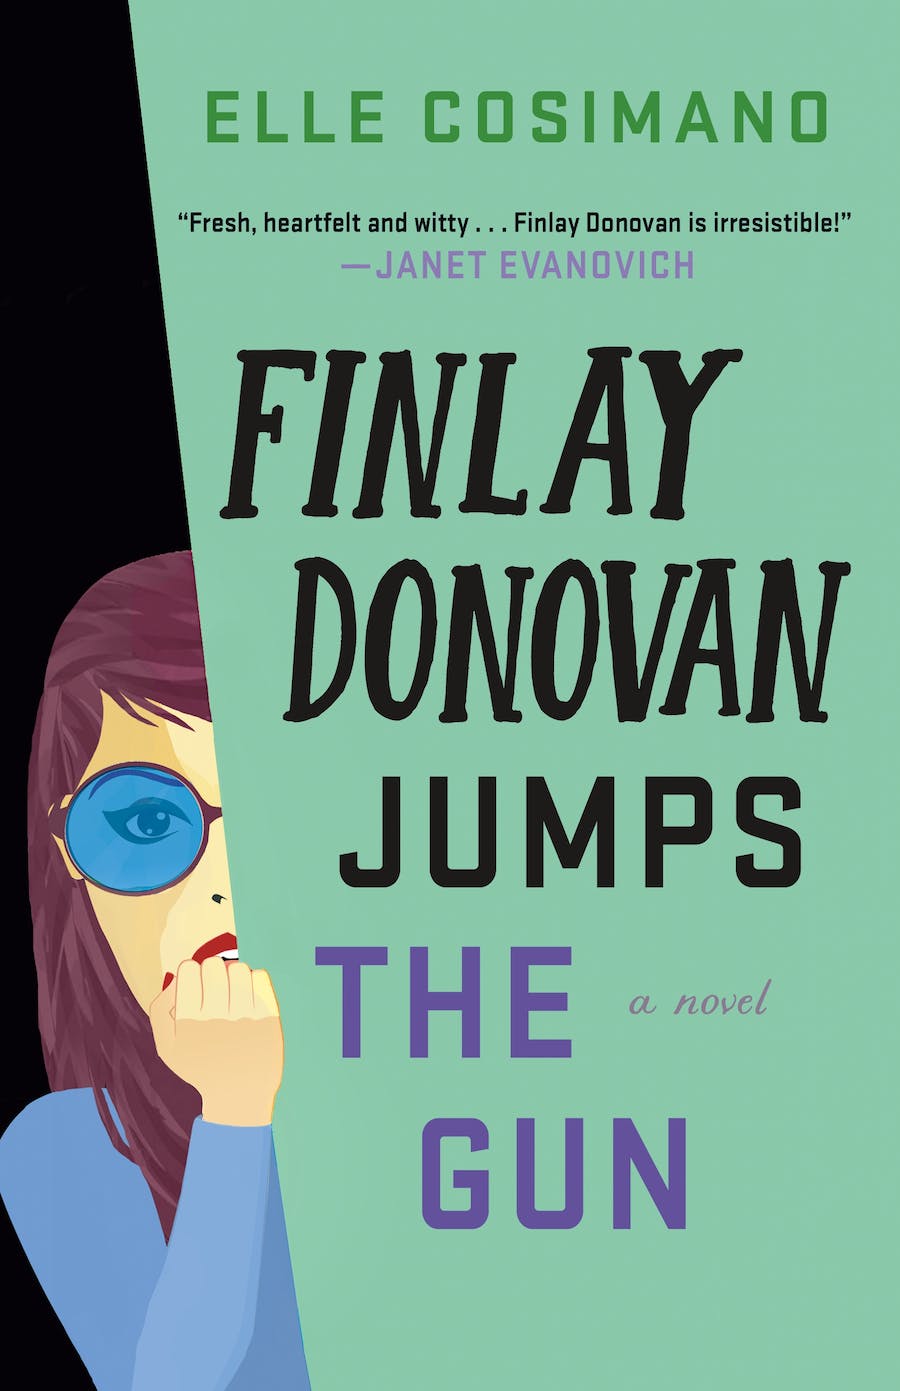 Finlay Donovan Jumps the Gun by Elle Cosimano Book Review